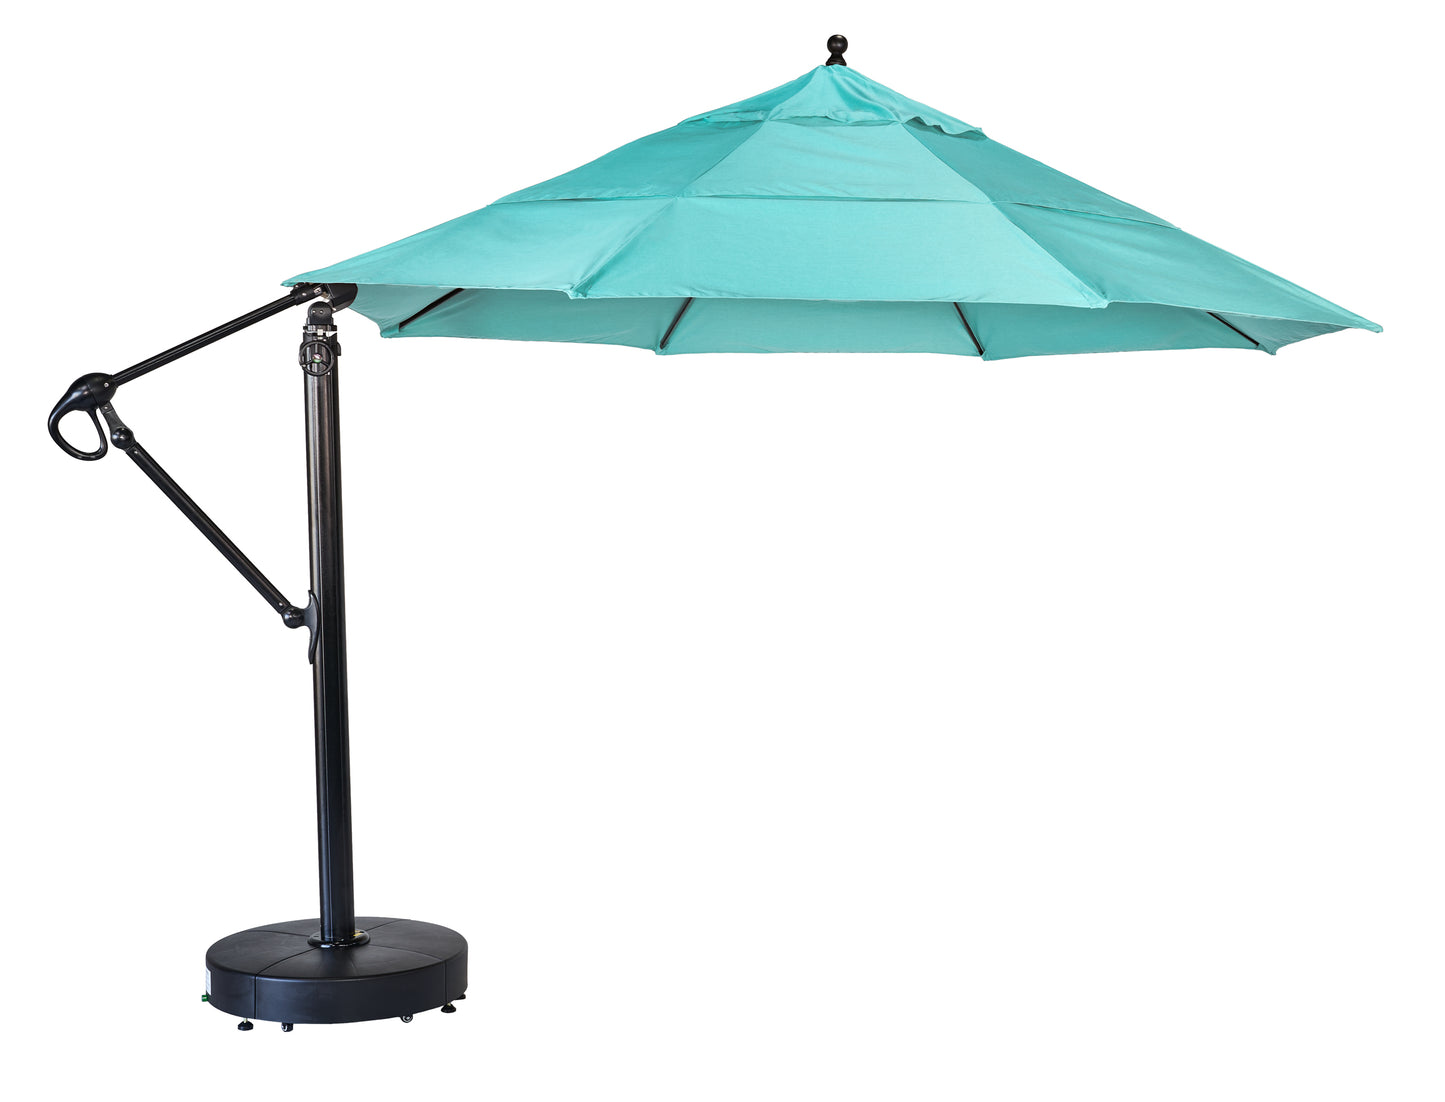 11' Easy Tilt-Lift Galtech Cantilever Umbrella